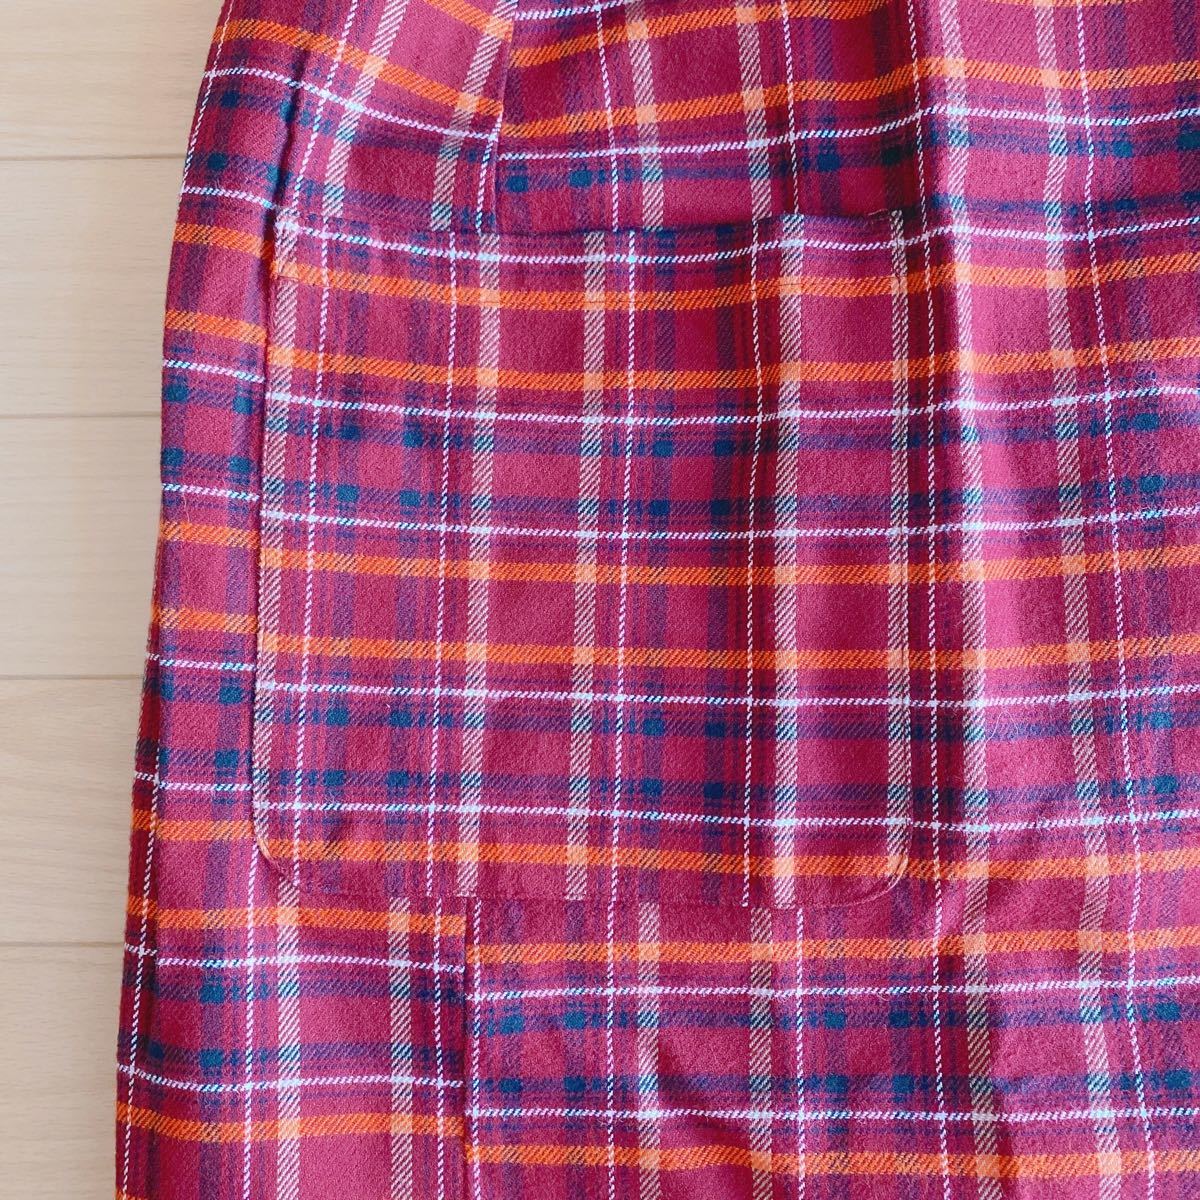 【H&M チェックタイトスカート】ベルト付き ラップスカート 巻きスカート タイトスカート チェック柄